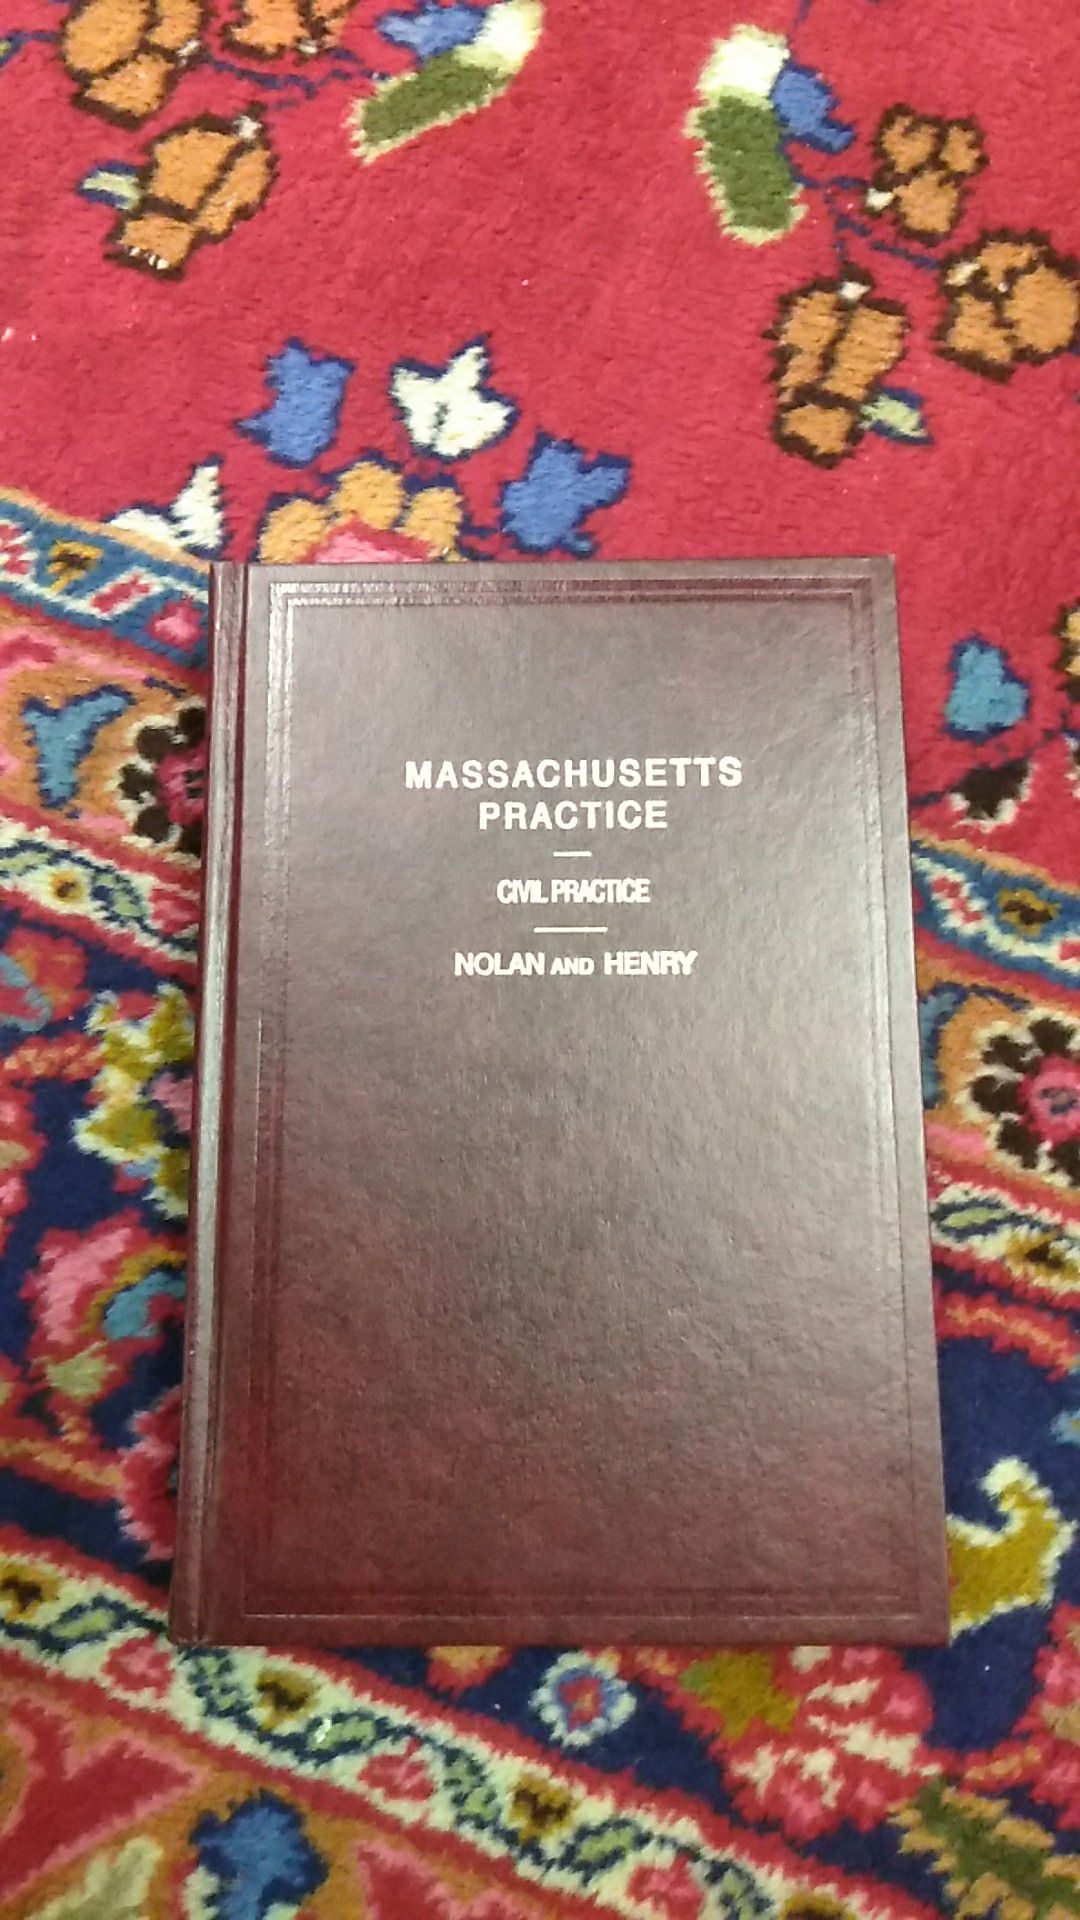 Massachusetts practice - civil practice